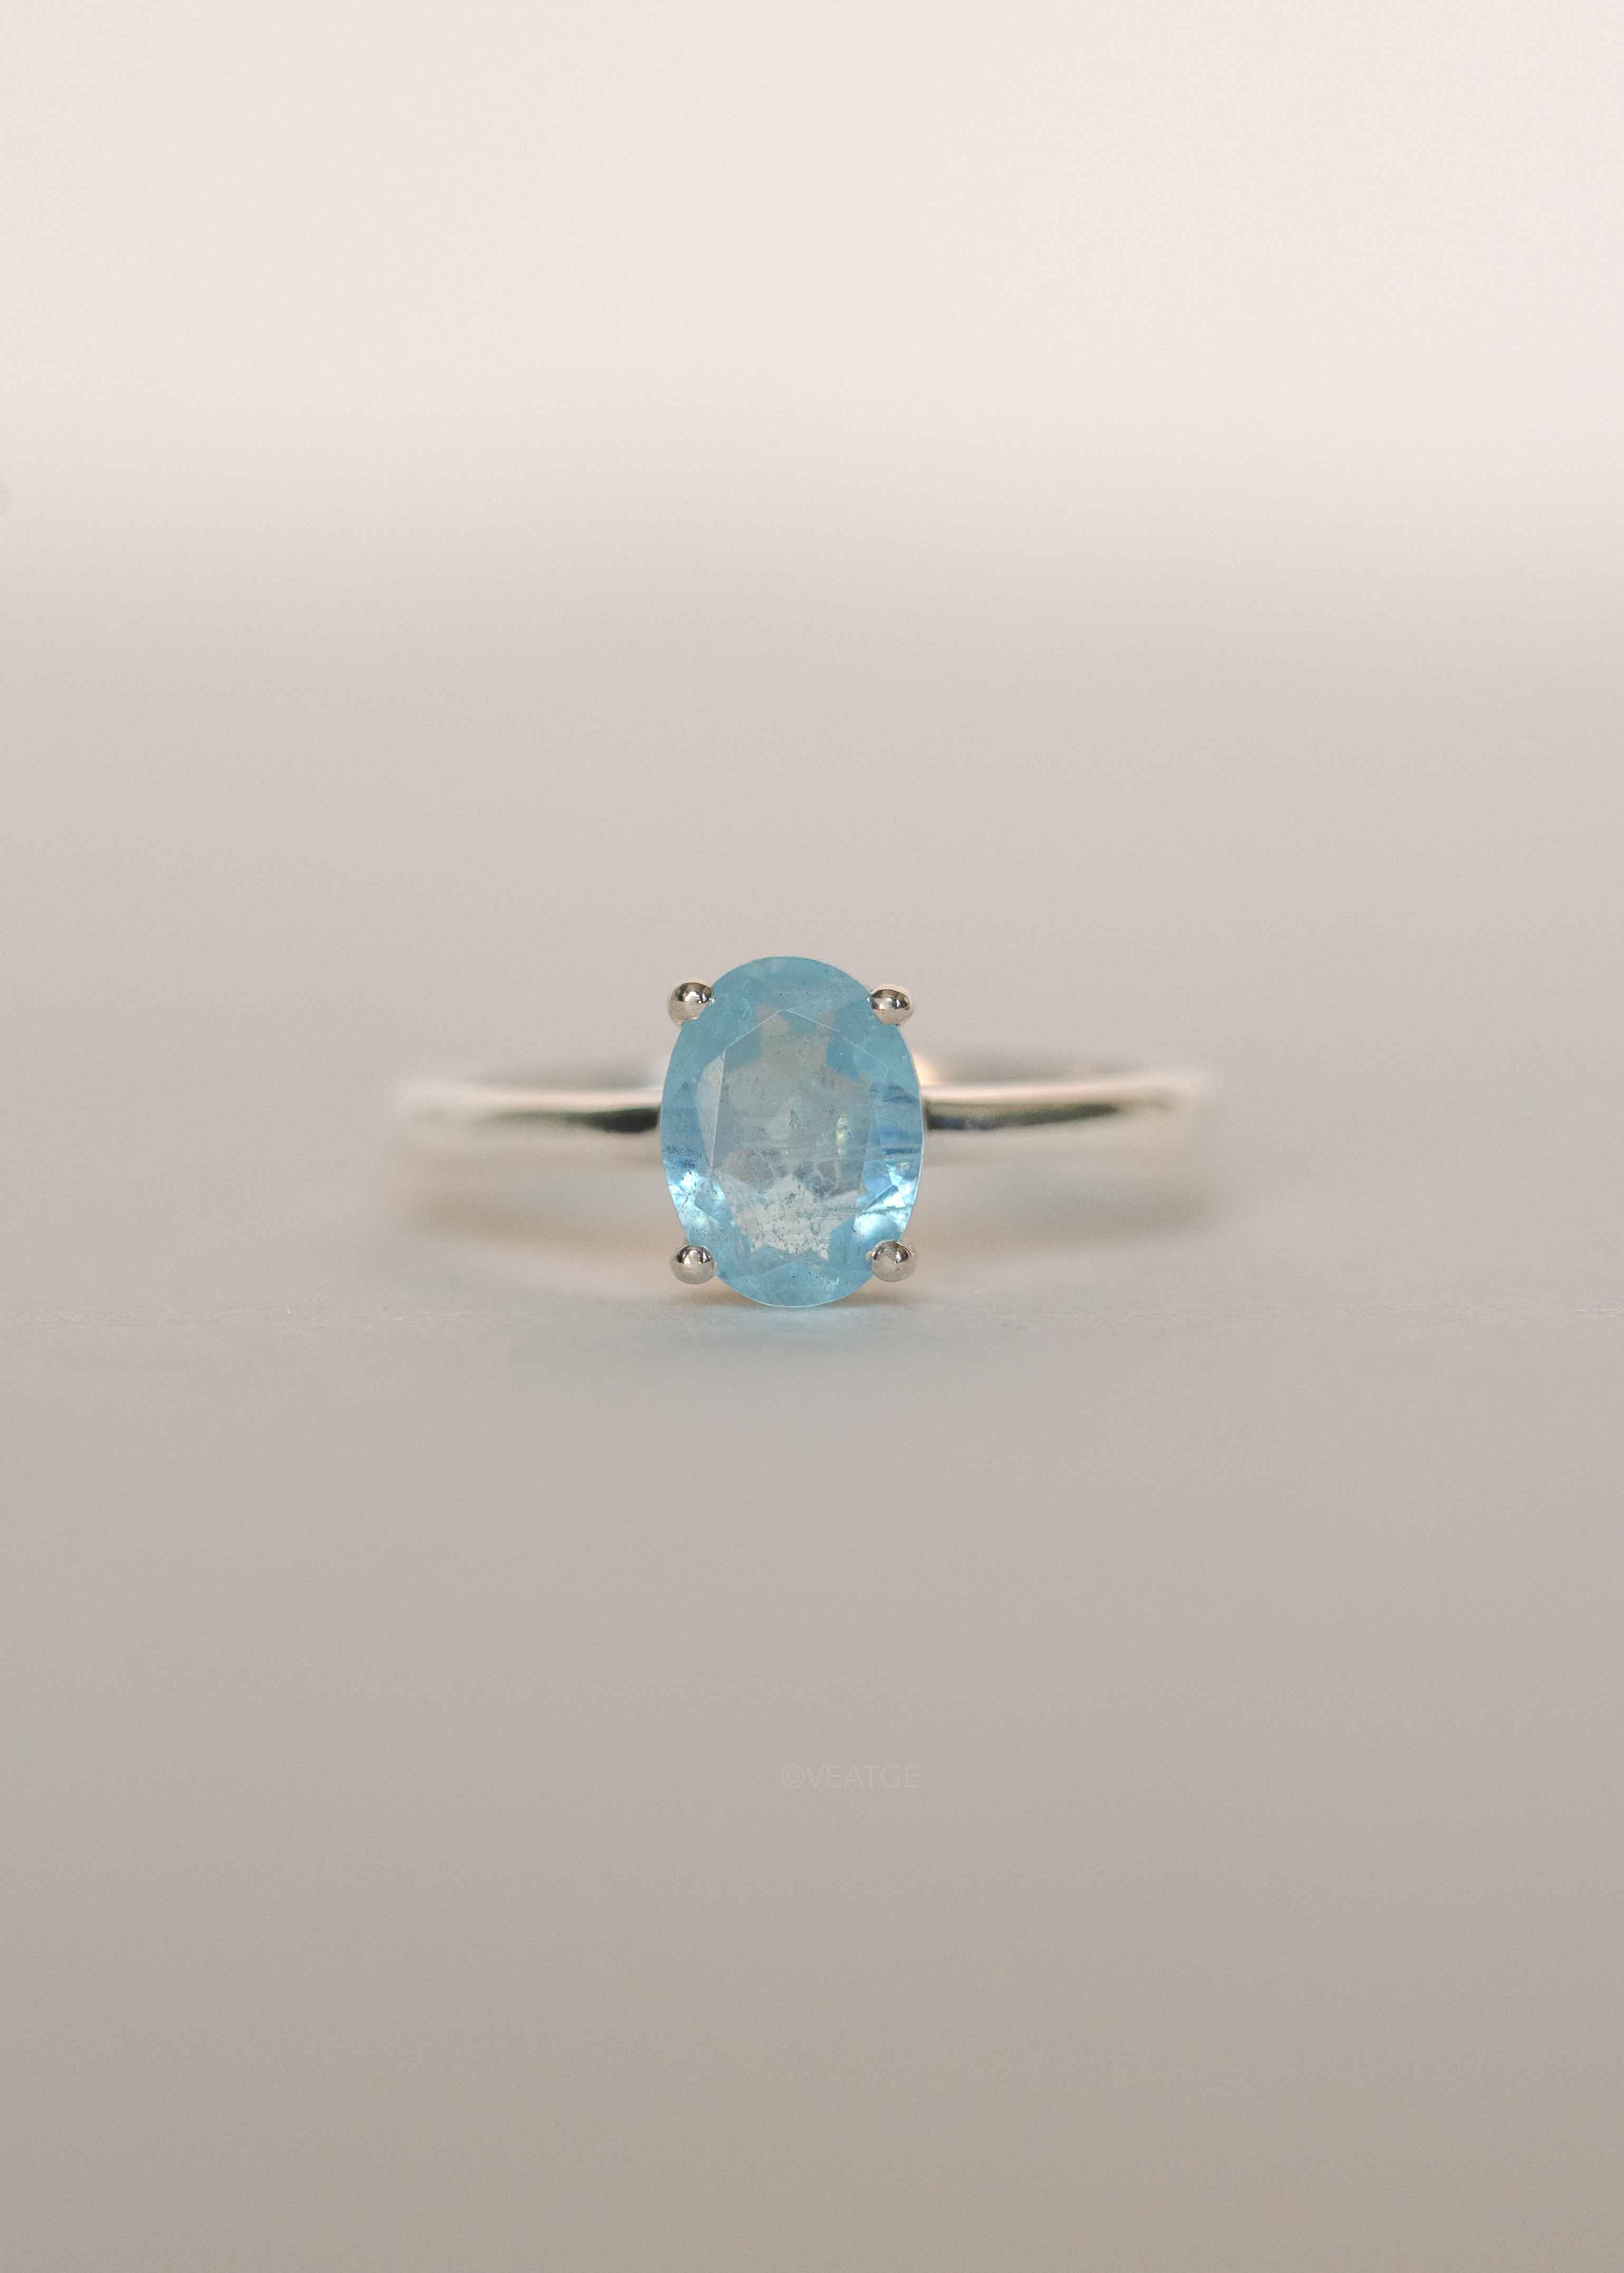 Aquamarine Gemstone March Birthstone Ring for Women Genuine Natural Gifts